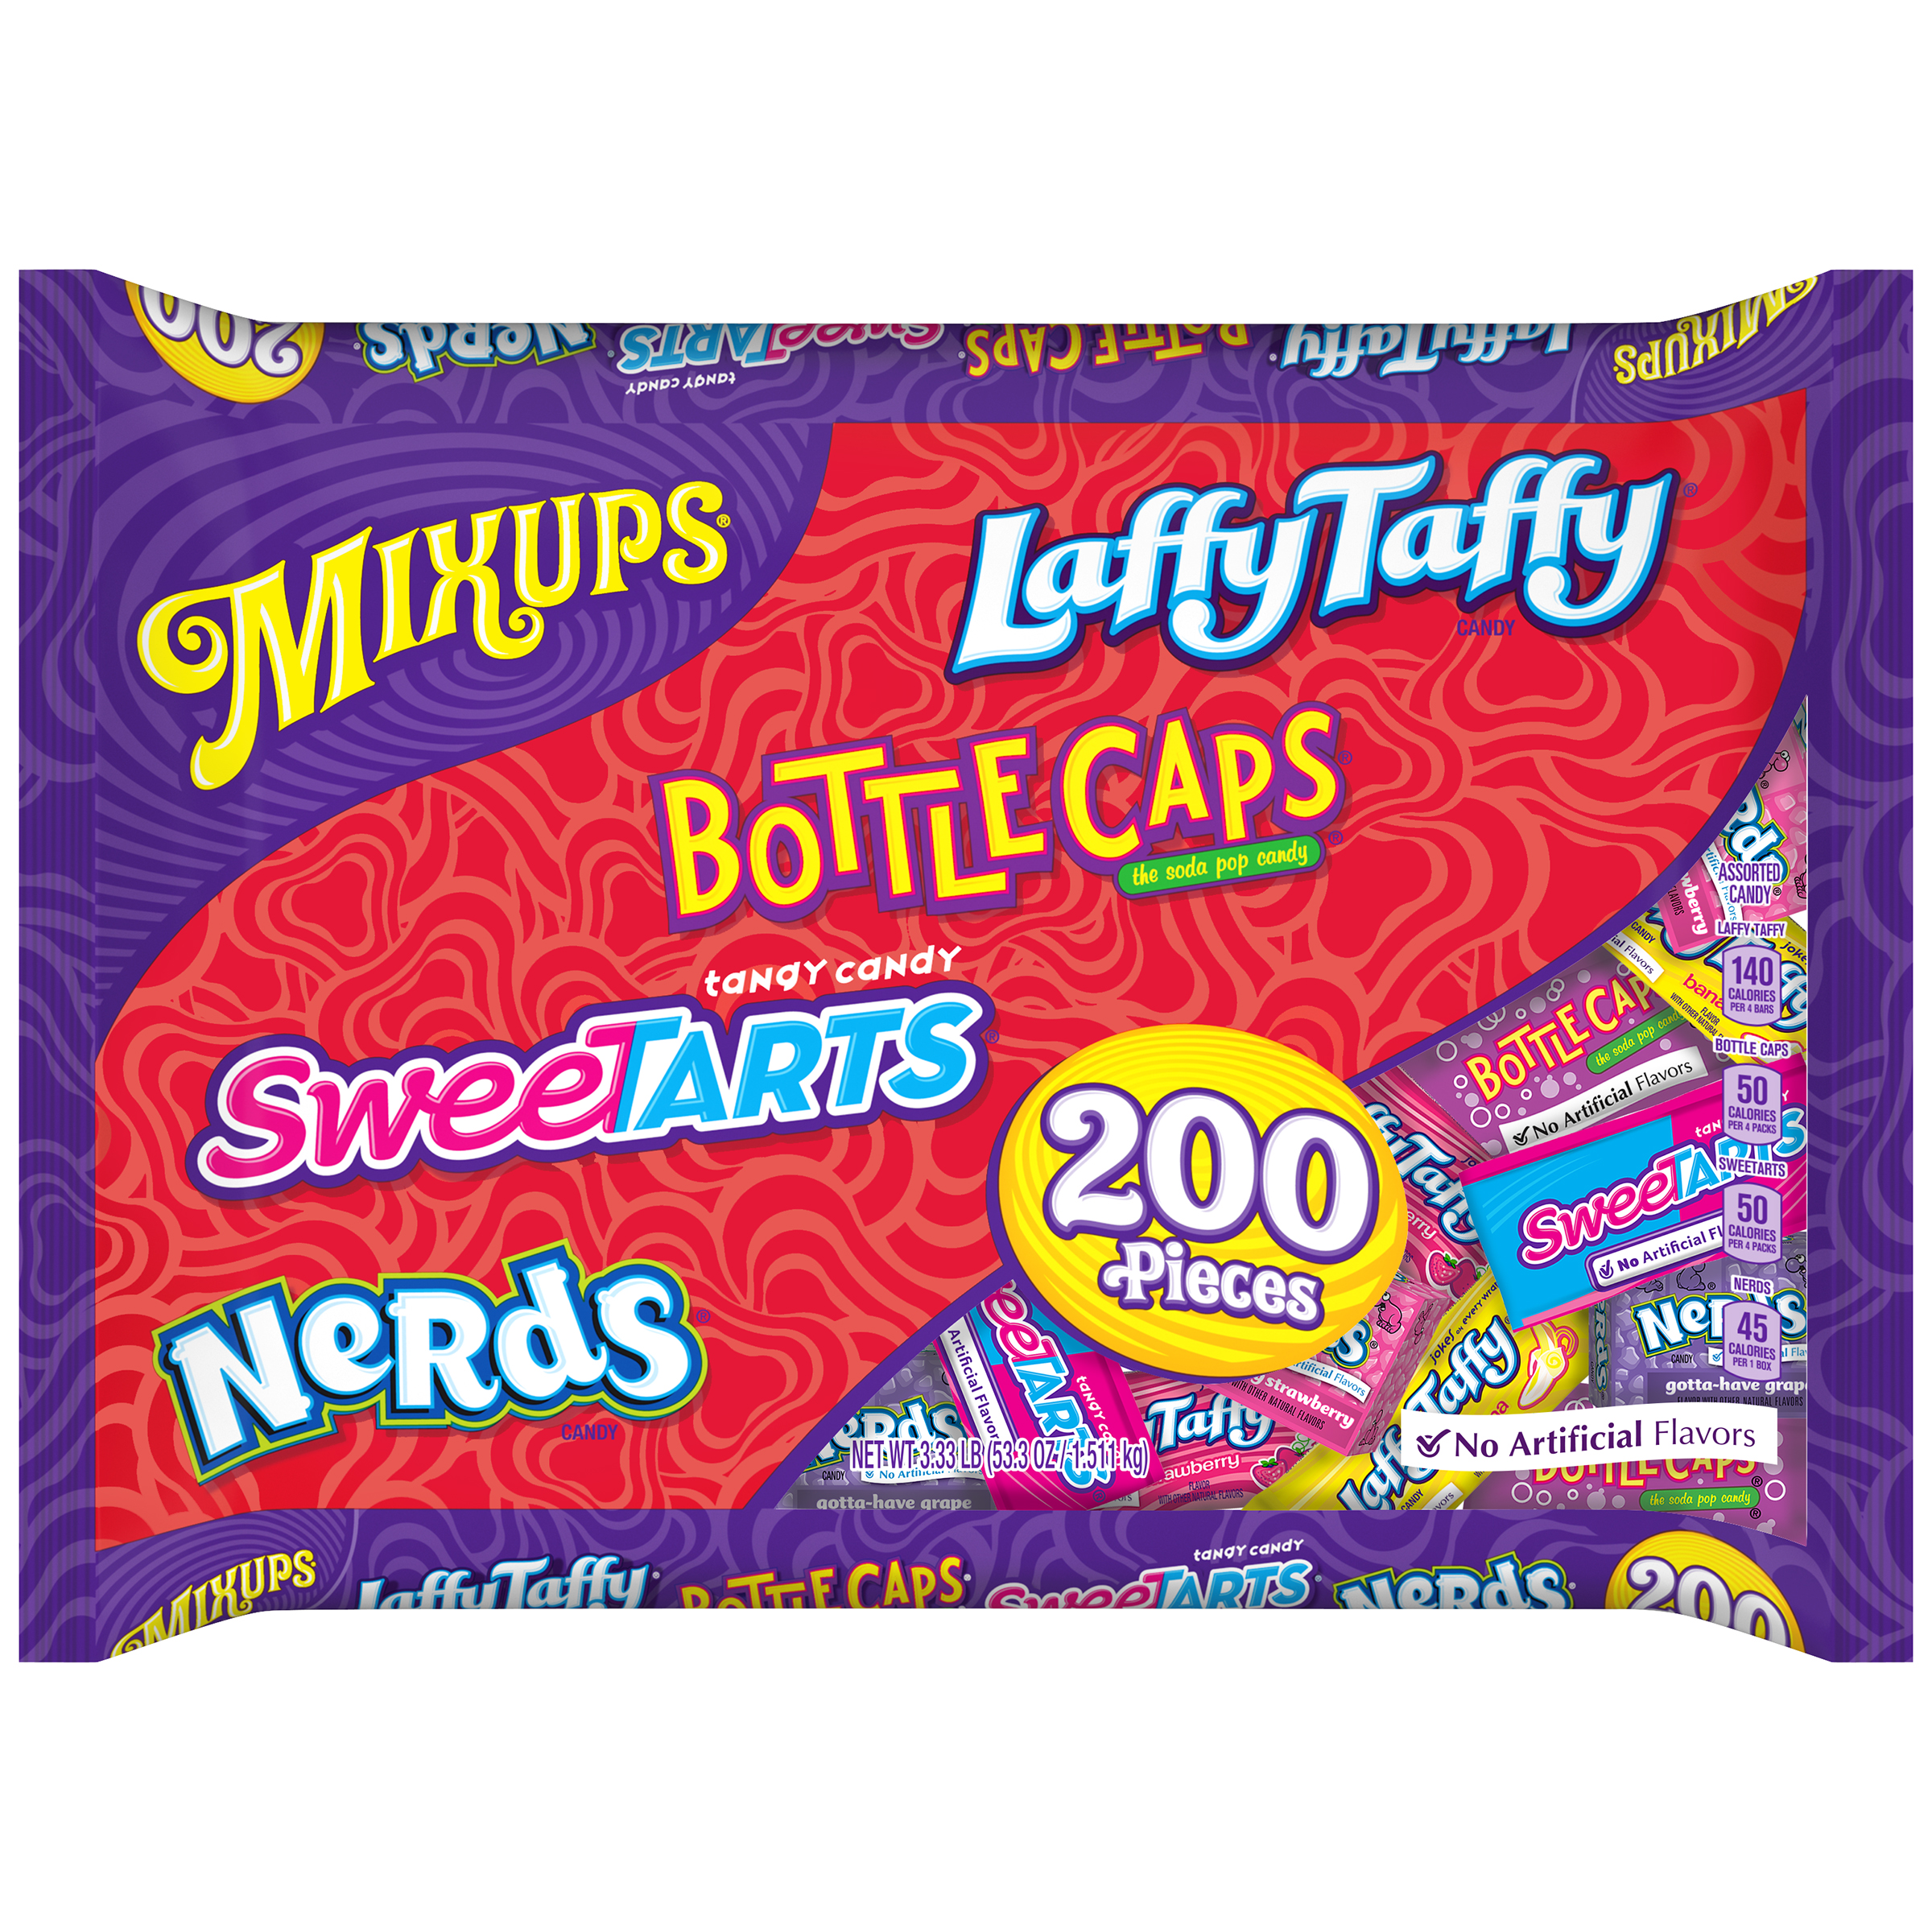 Wonka Mixups of Laffy Taffy, Bottle Caps, SweeTarts, and Nerds - 200 Pieces, 3.33 lbs